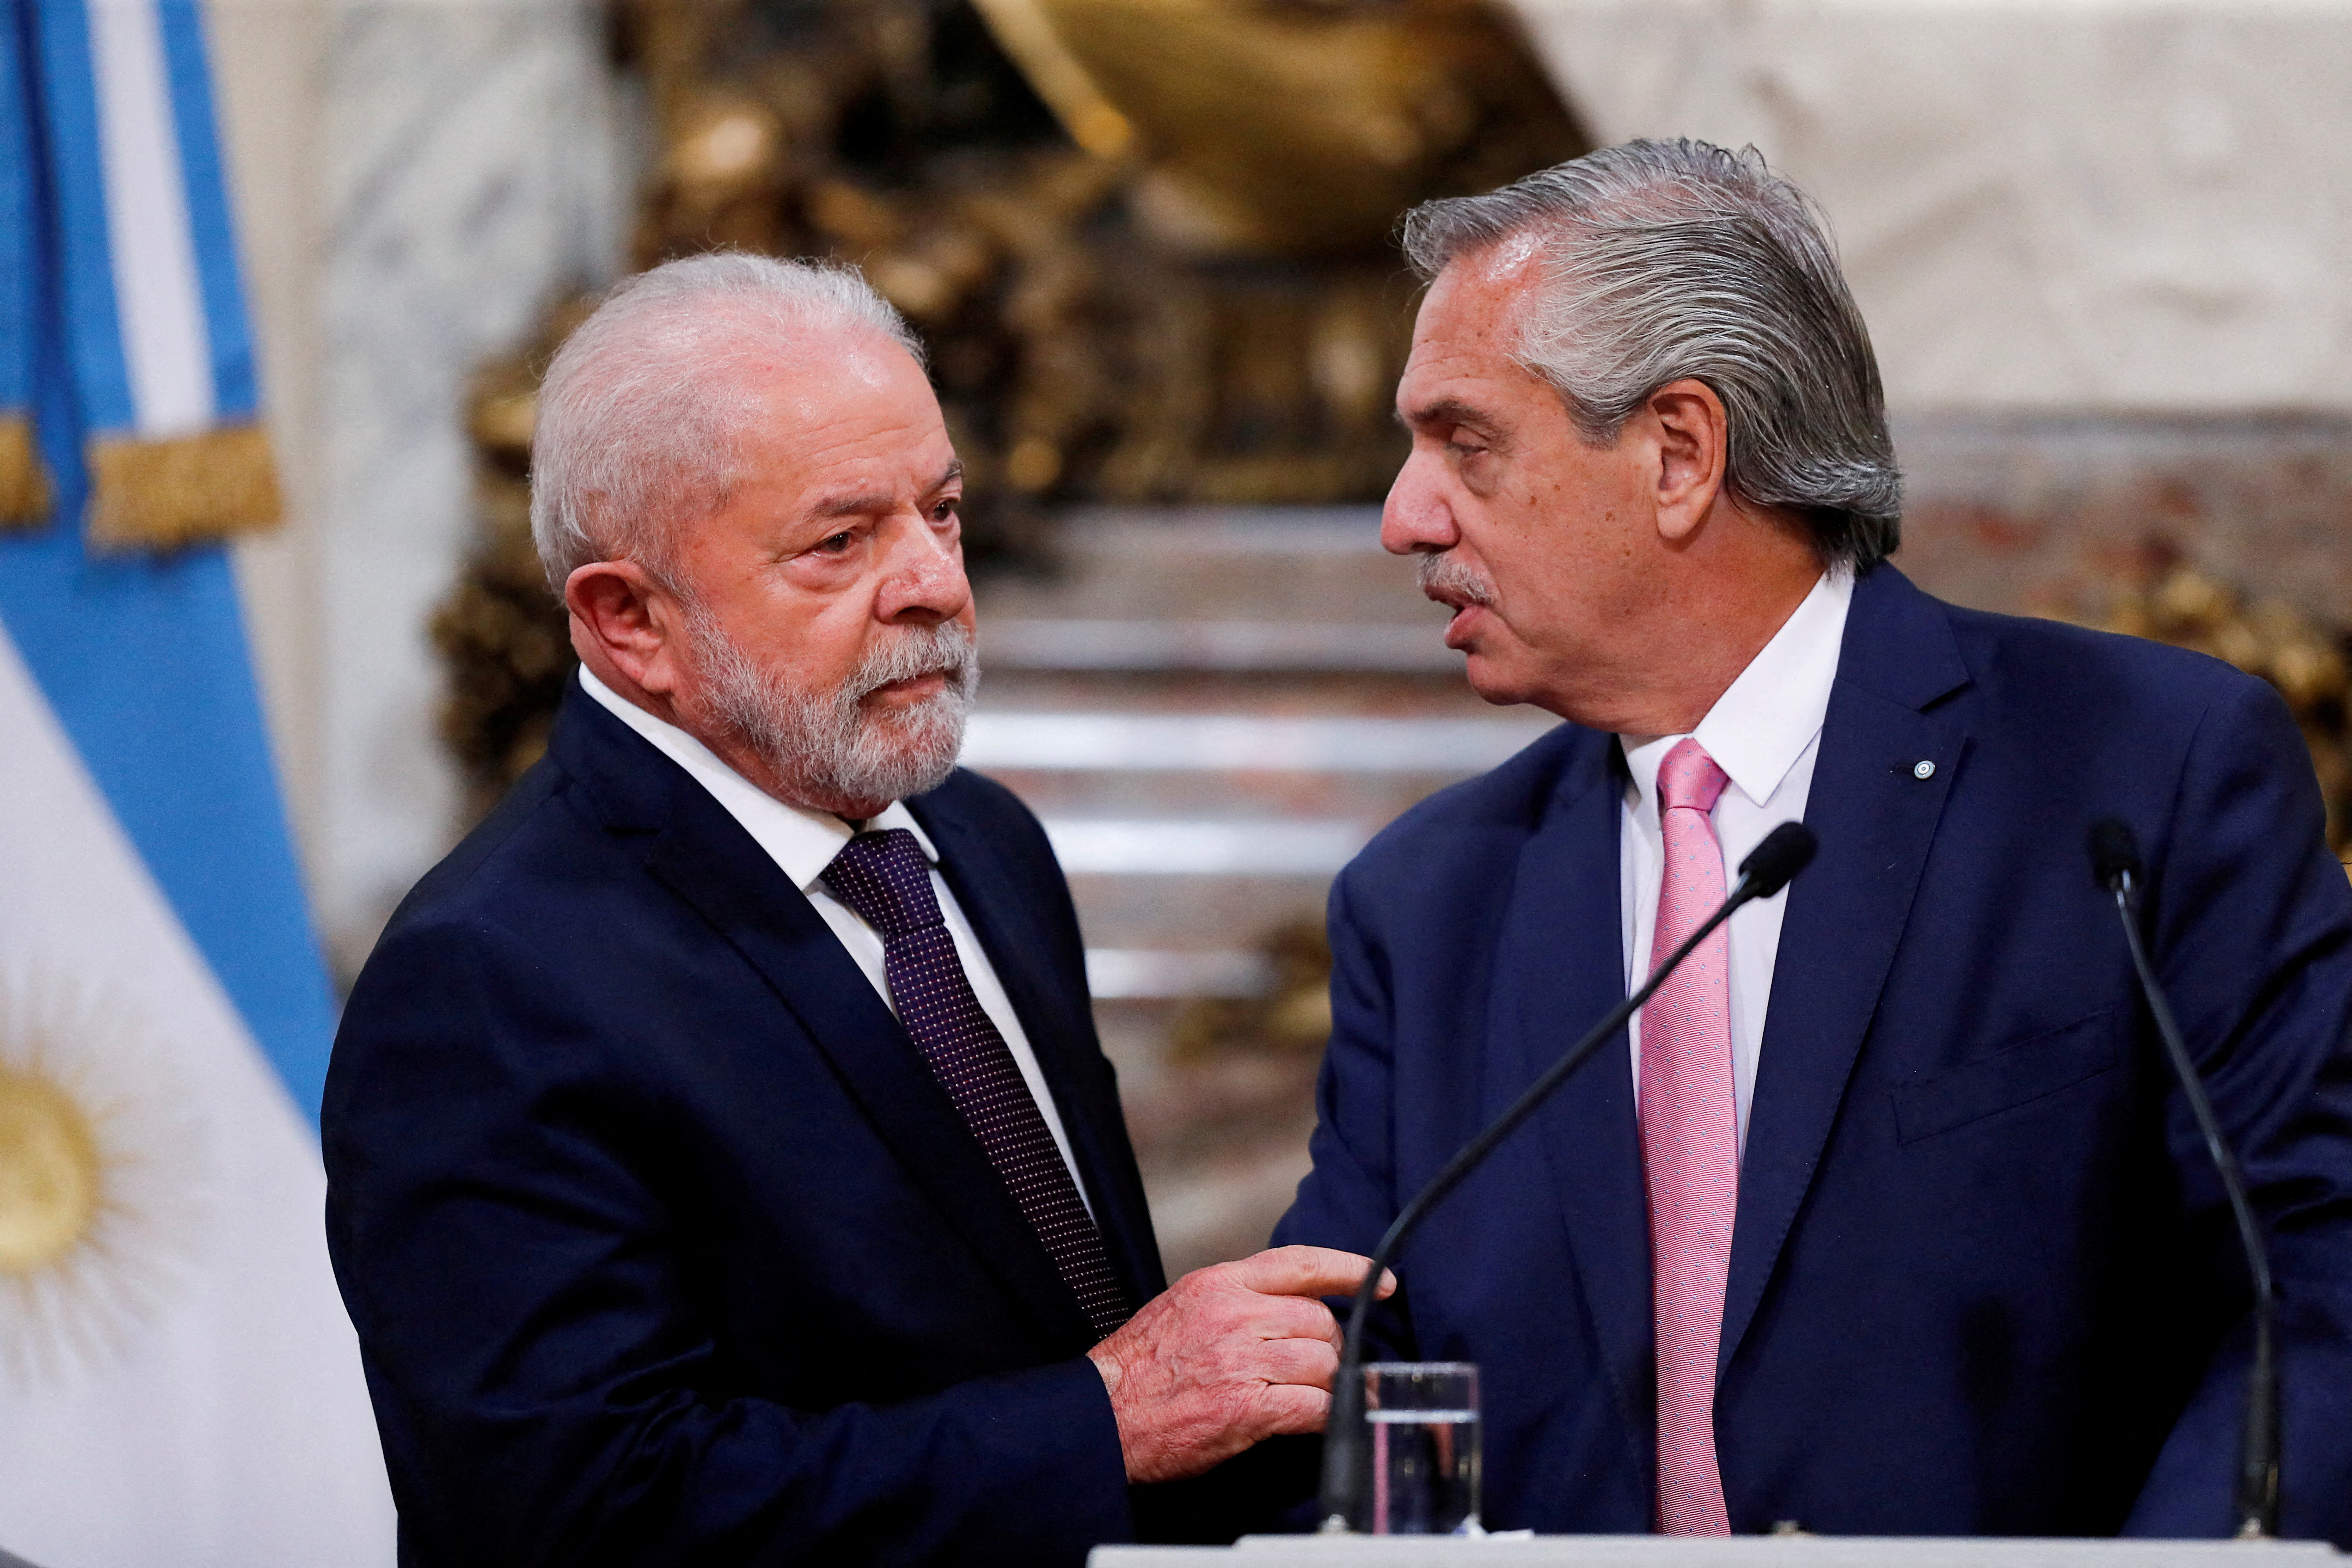  Lula da Silva y Alberto Fernandez en la Casa Rosada (Reuters)